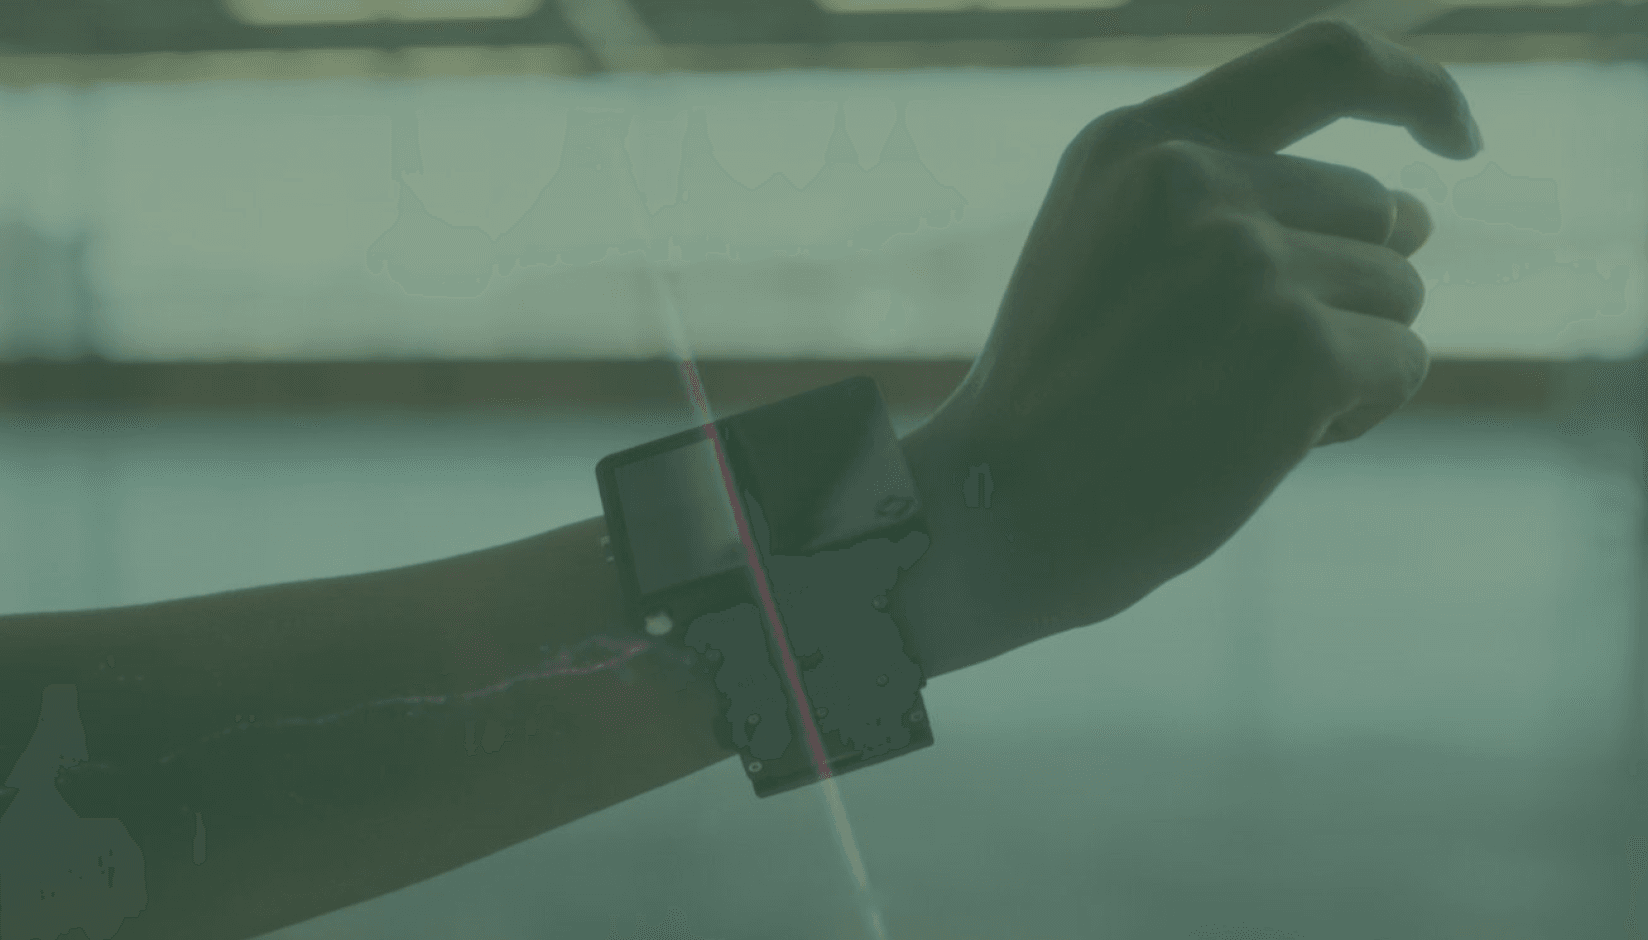 wristband AR sensor on coworking space member's hand